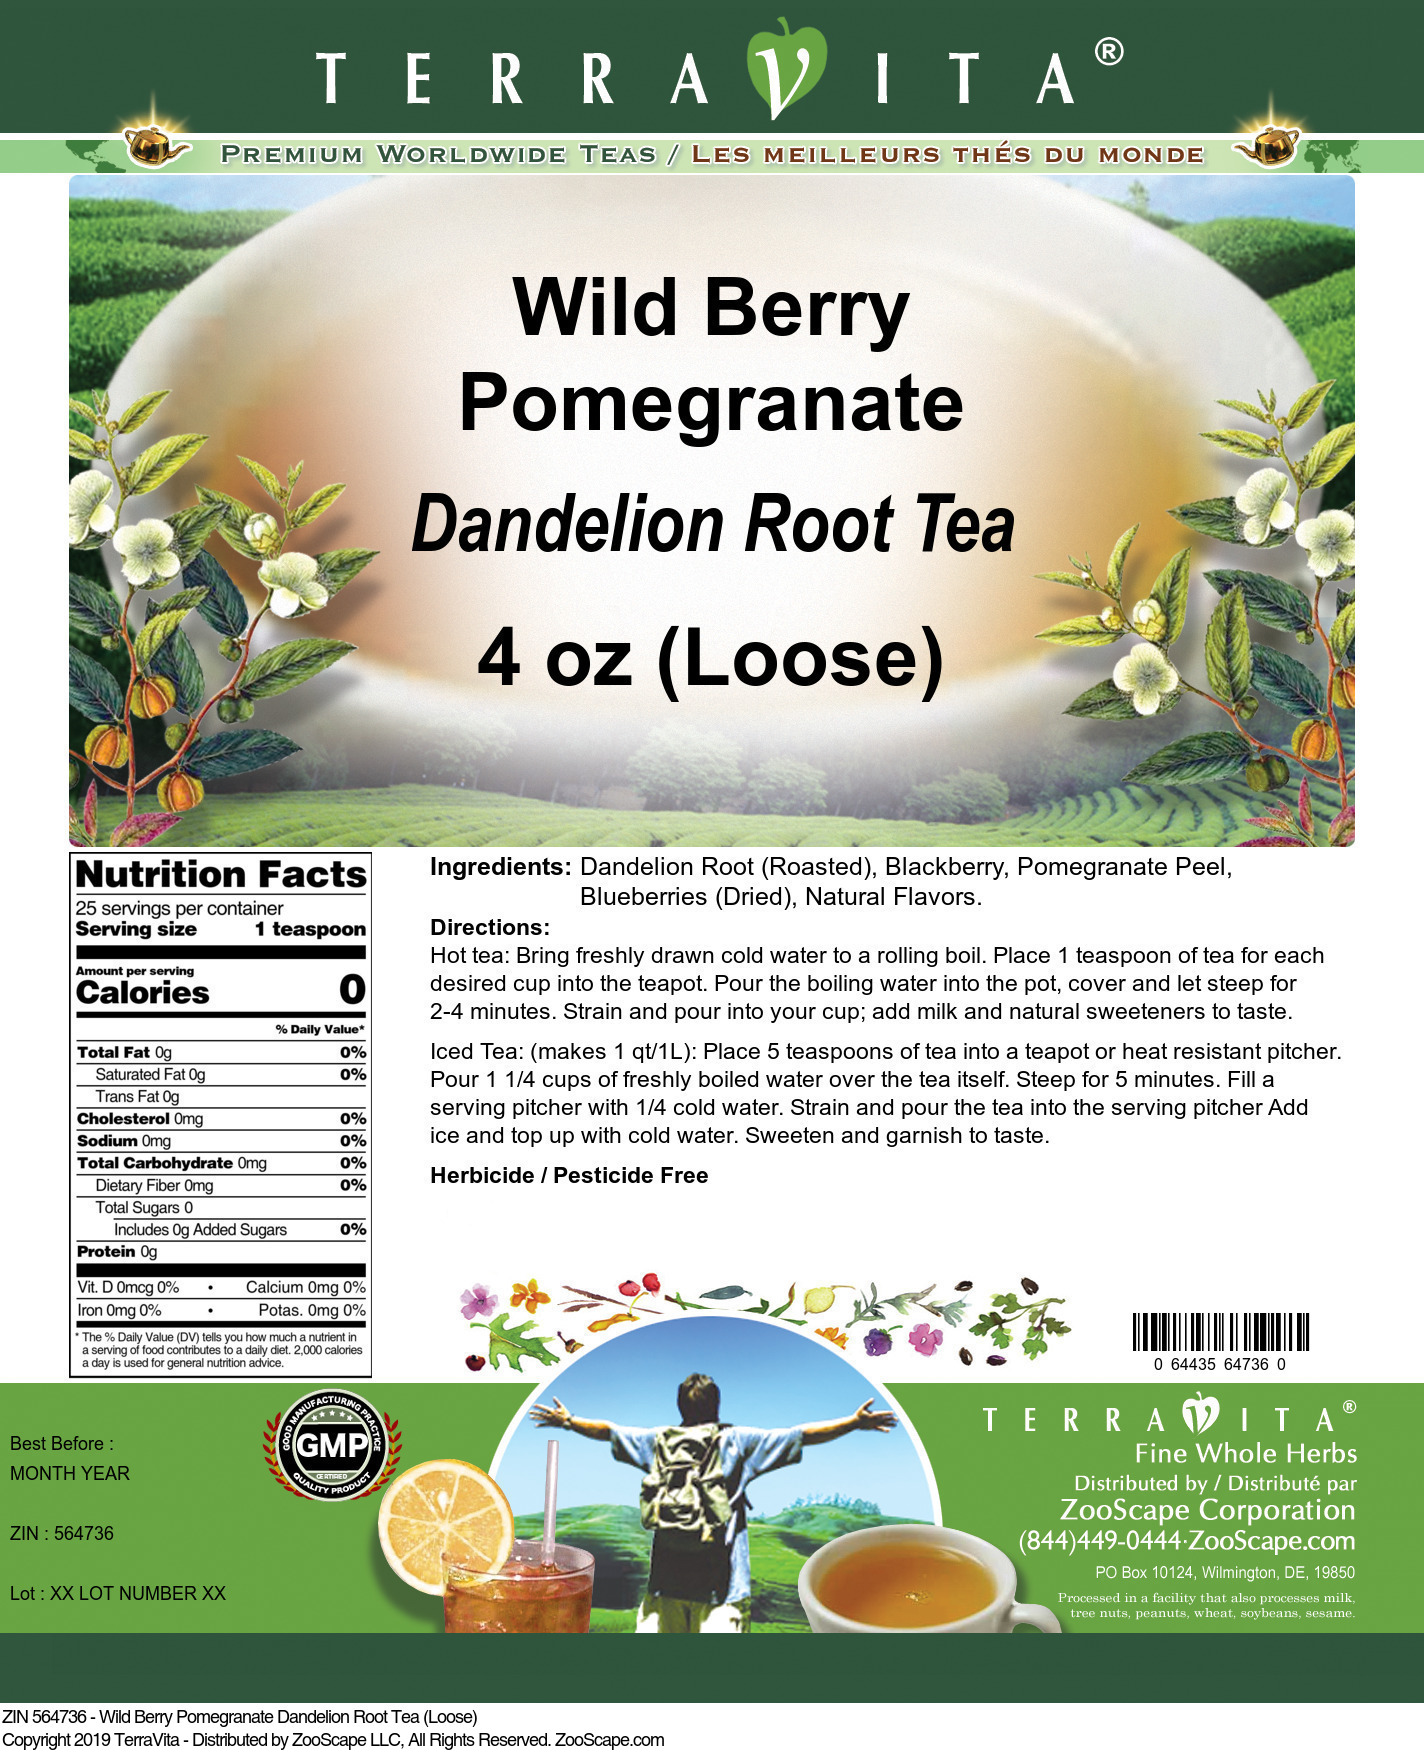 Wild Berry Pomegranate Dandelion Root Tea (Loose) - Label